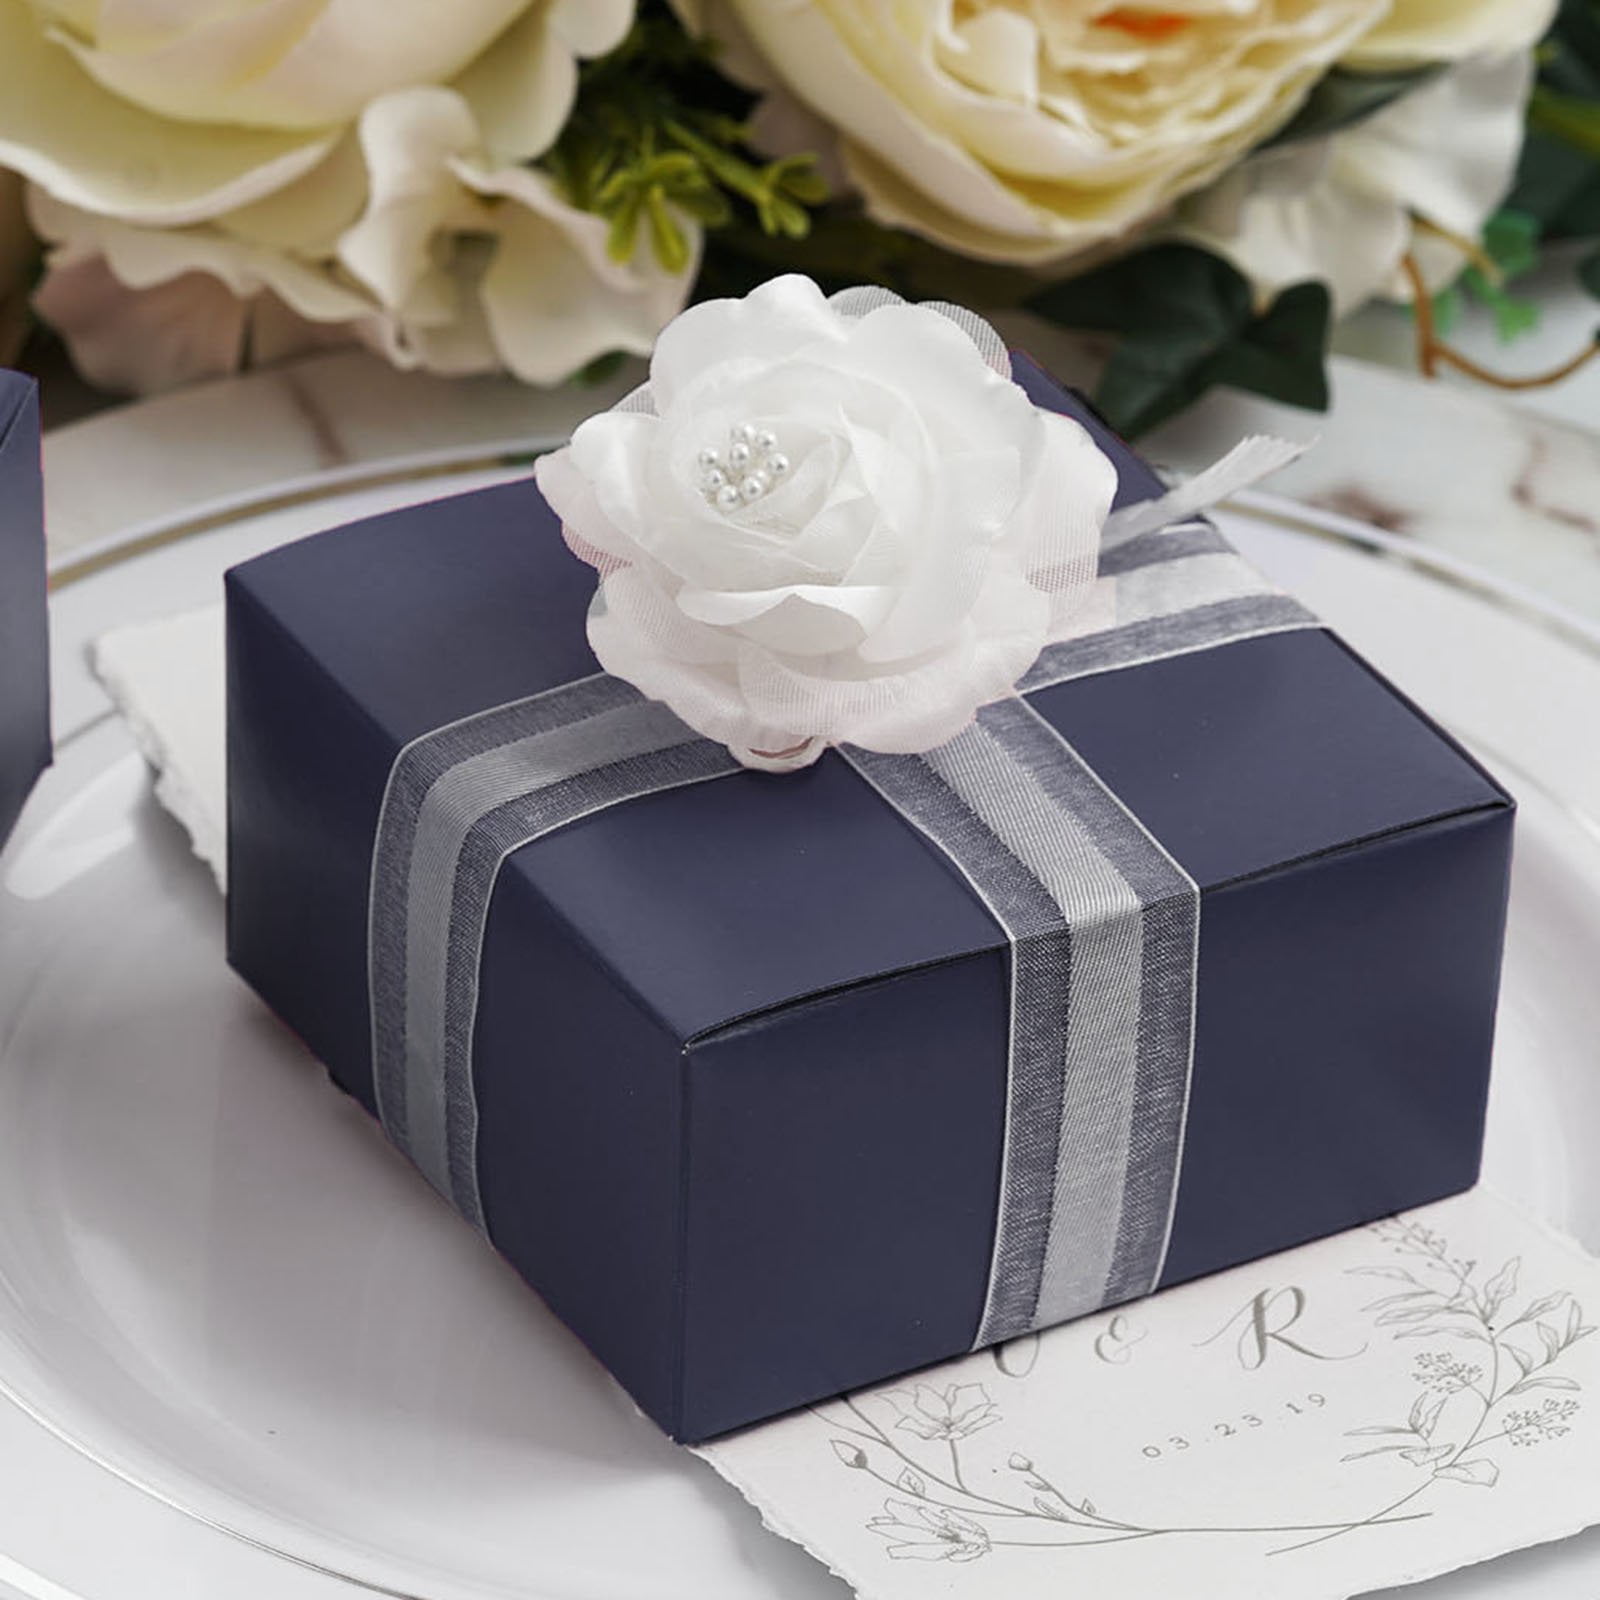 20-100PCS Luxury Wedding Favour Favor Sweet Boxes Place Cards Table Decorations 